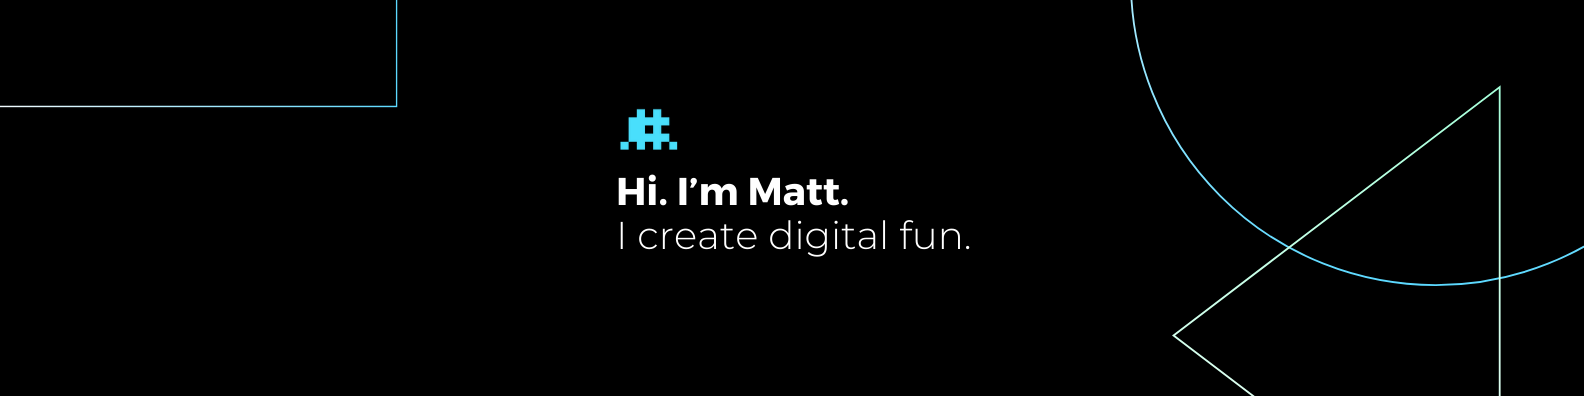 Hi. I'm Matt. I create digital fun.